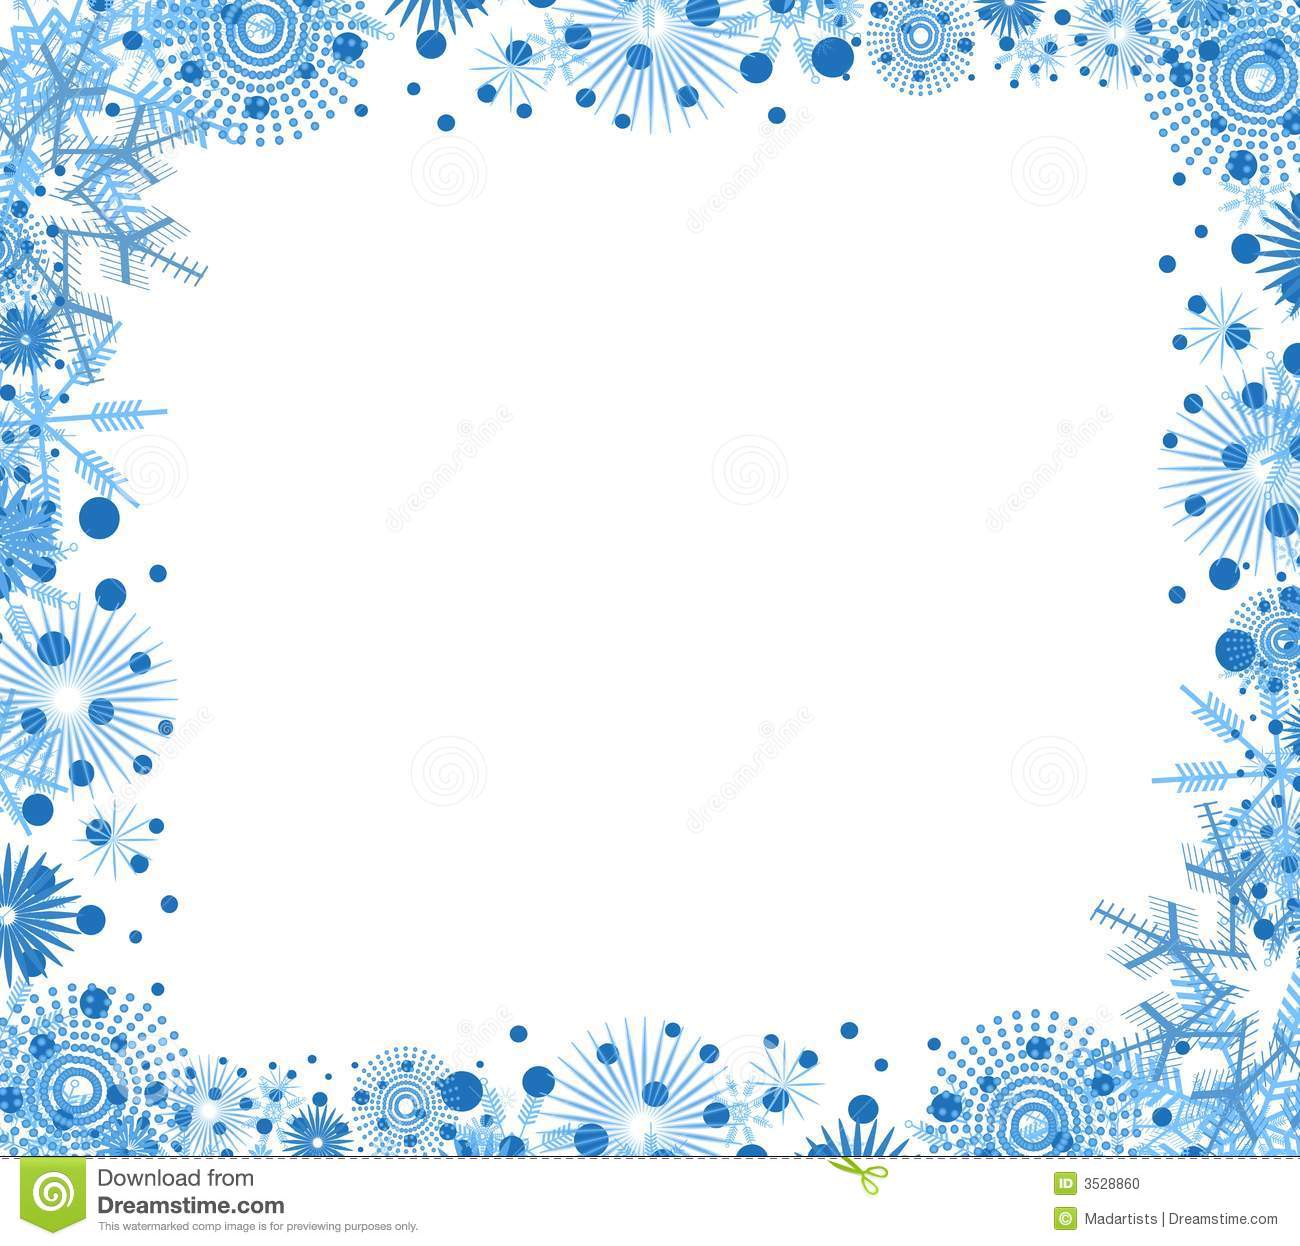 Clip Art Background Border Featuring Decorative Blue Snowflakes